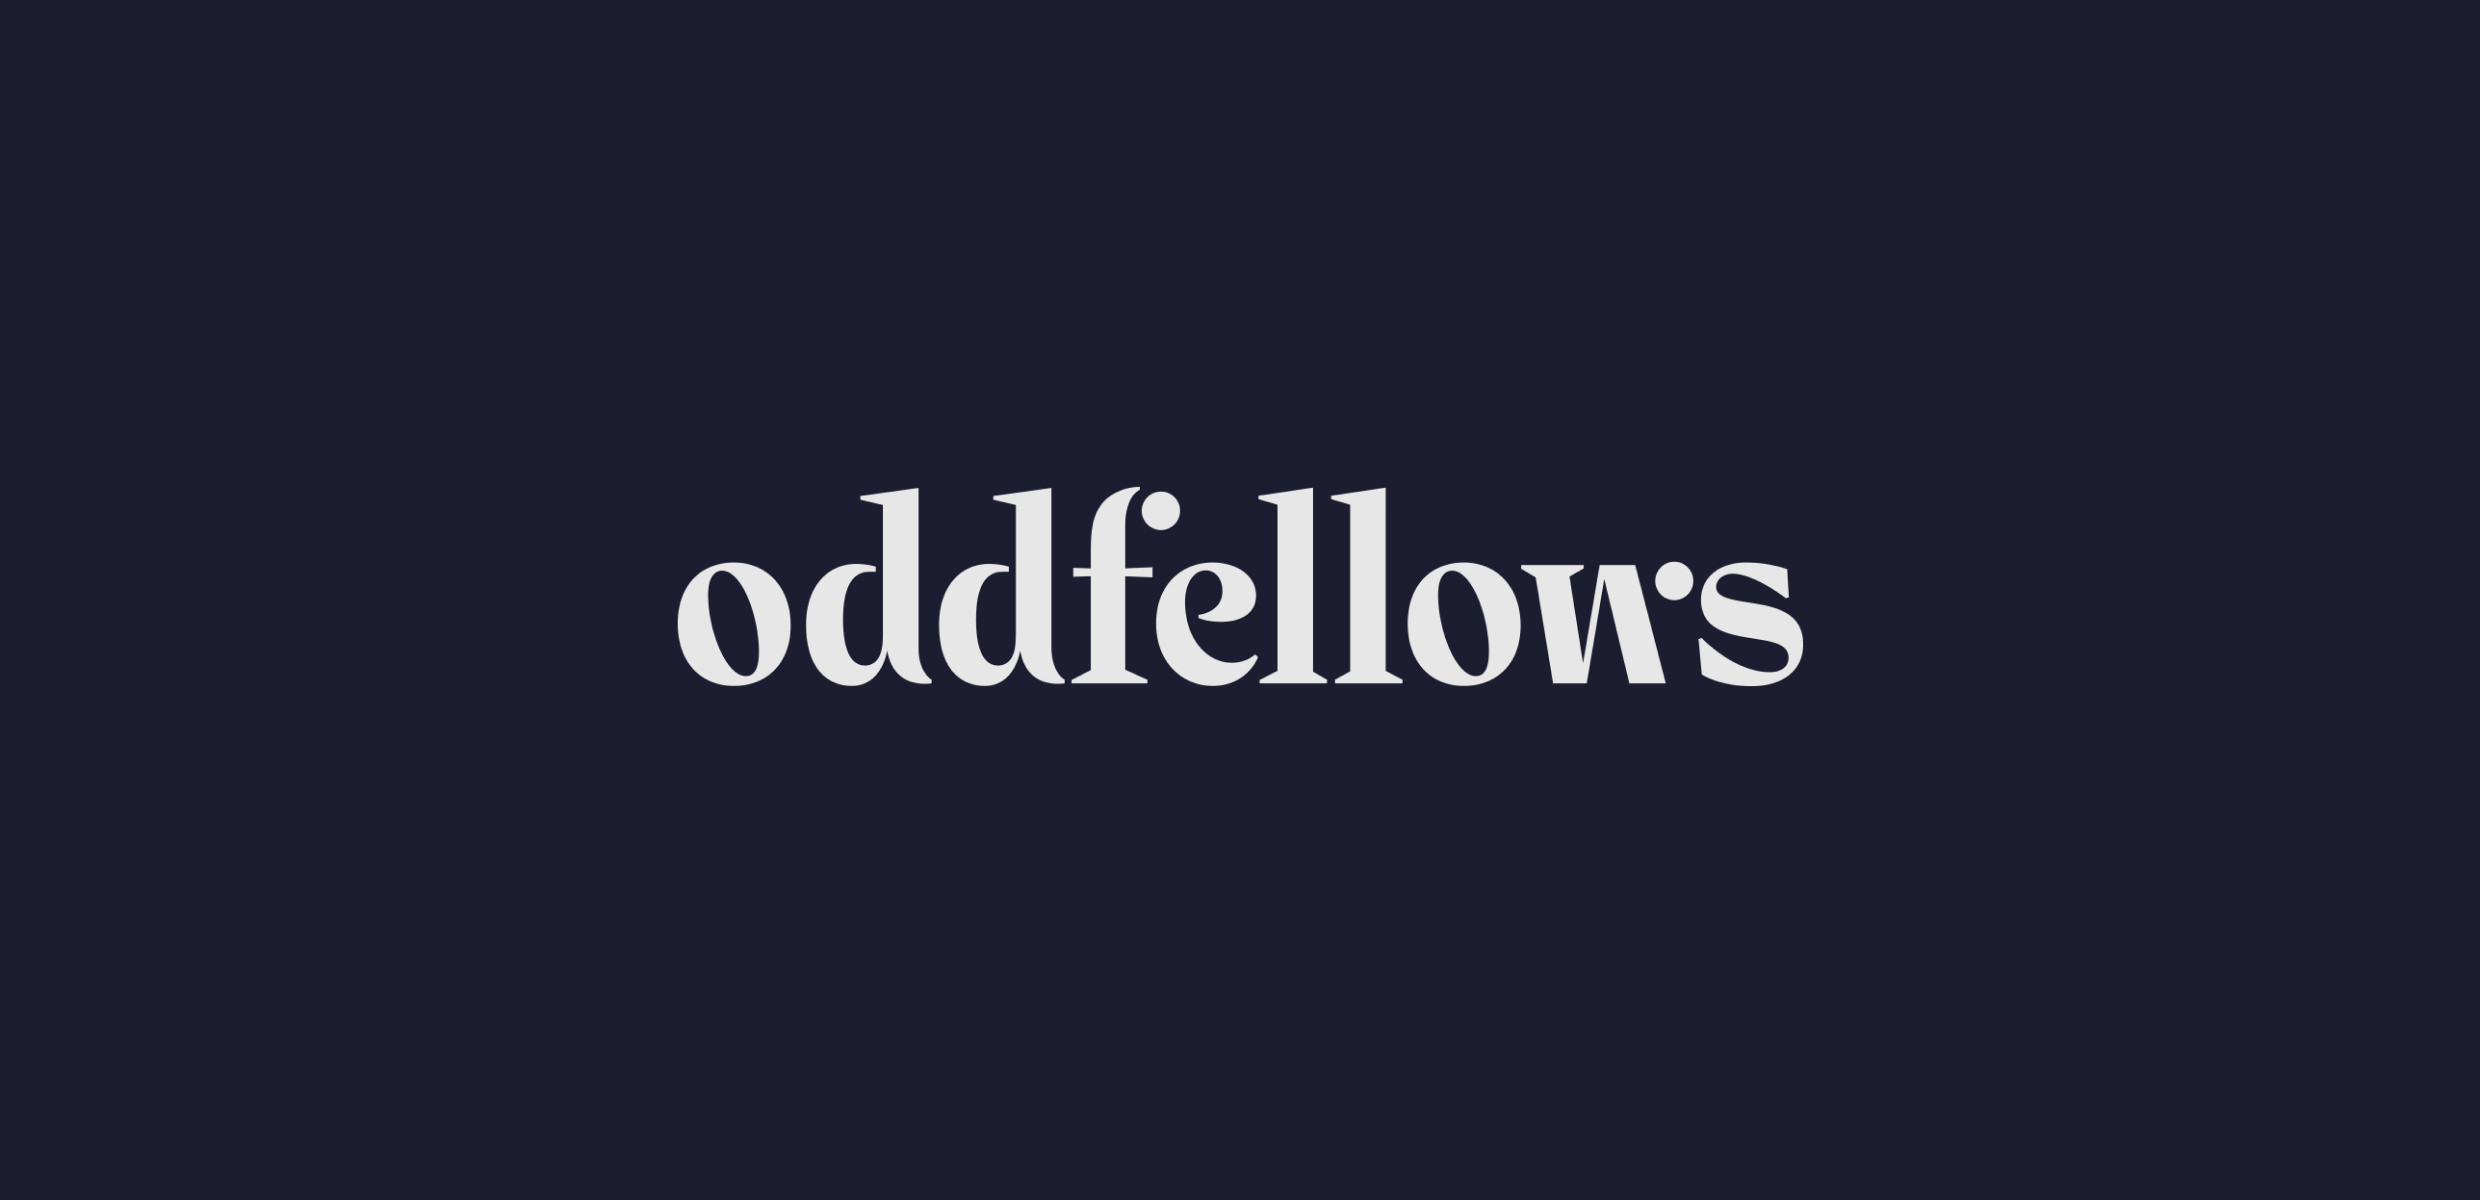 Oddfellows Studio Spotlight: Illustrated Looks & Compelling Stories -  Motion Array